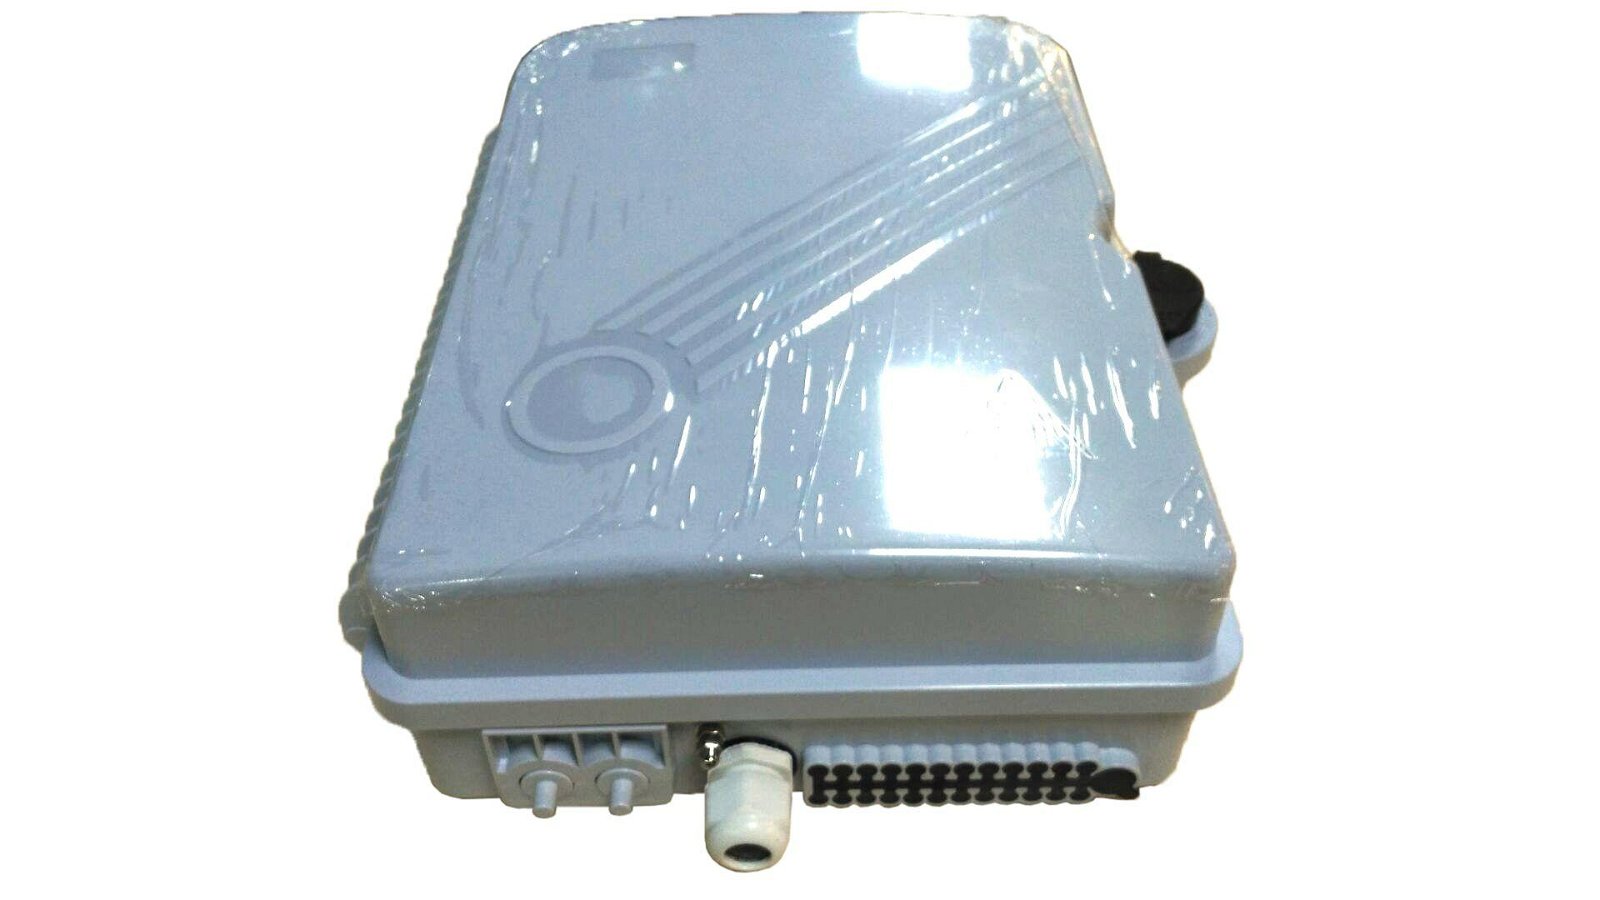 24 Cores SC, LC Fiber Optic Termination Box